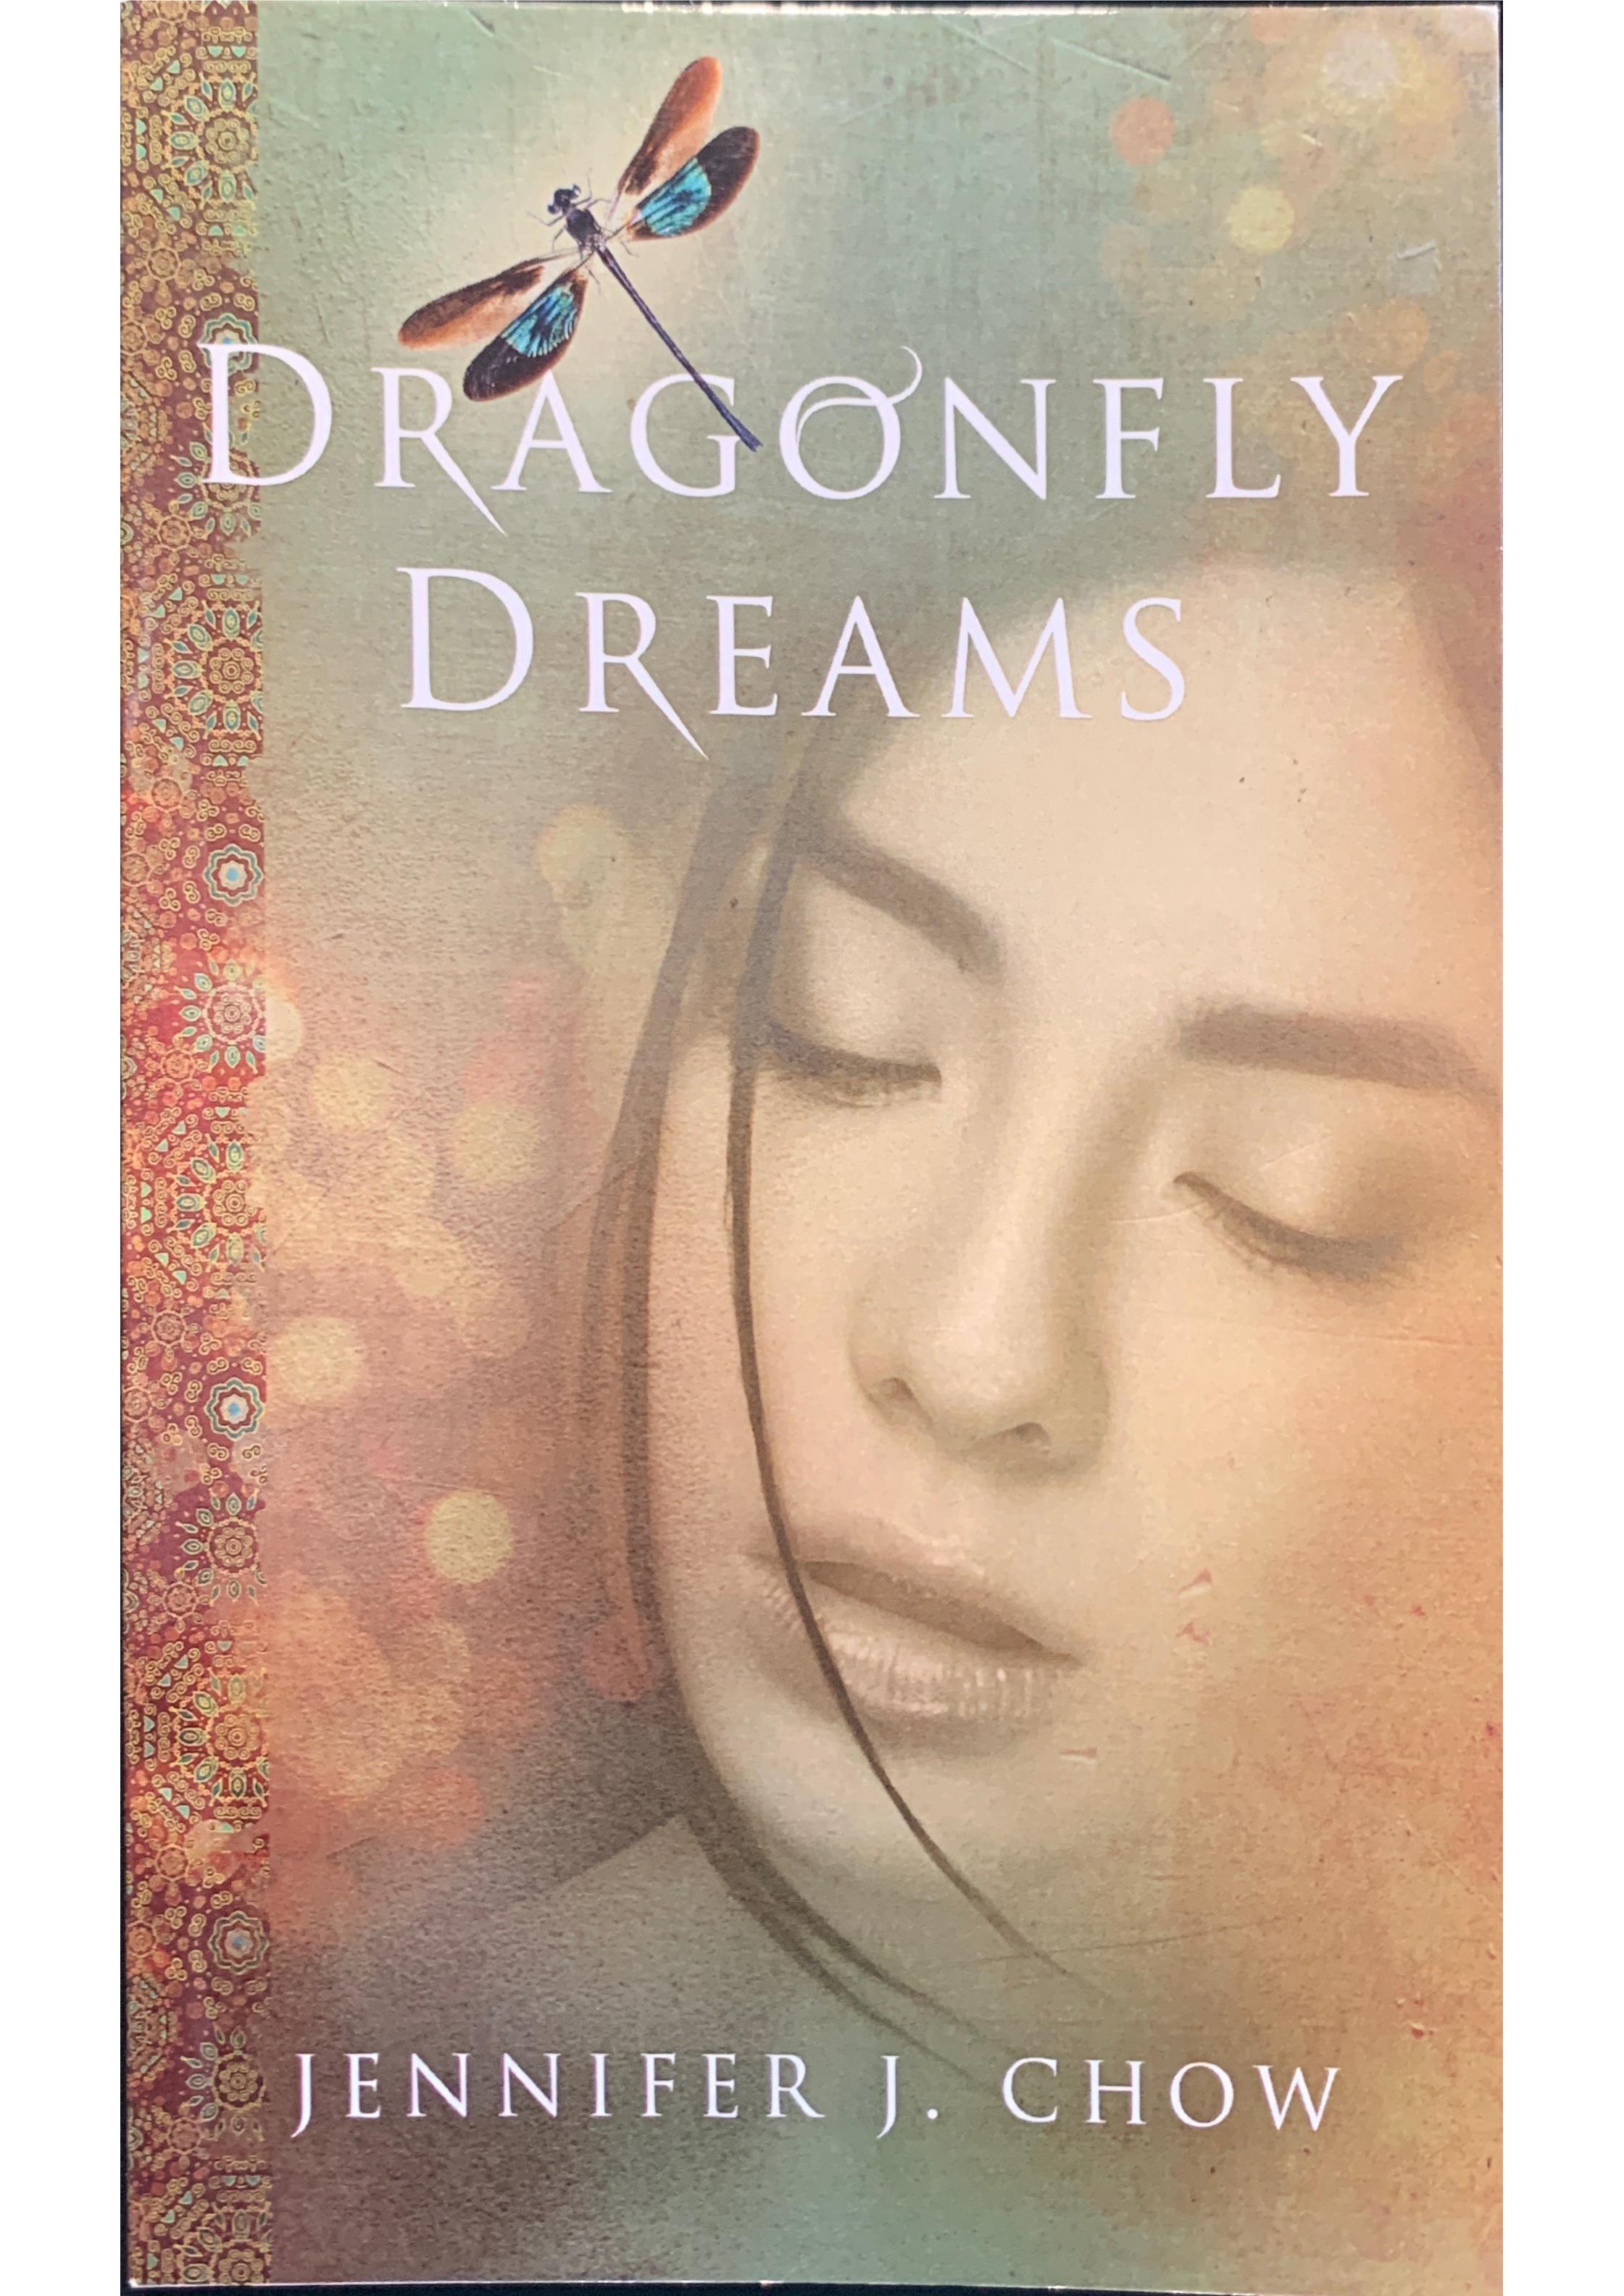 1323. Dragonfly Dreams/Jennifer J. Chow/2015